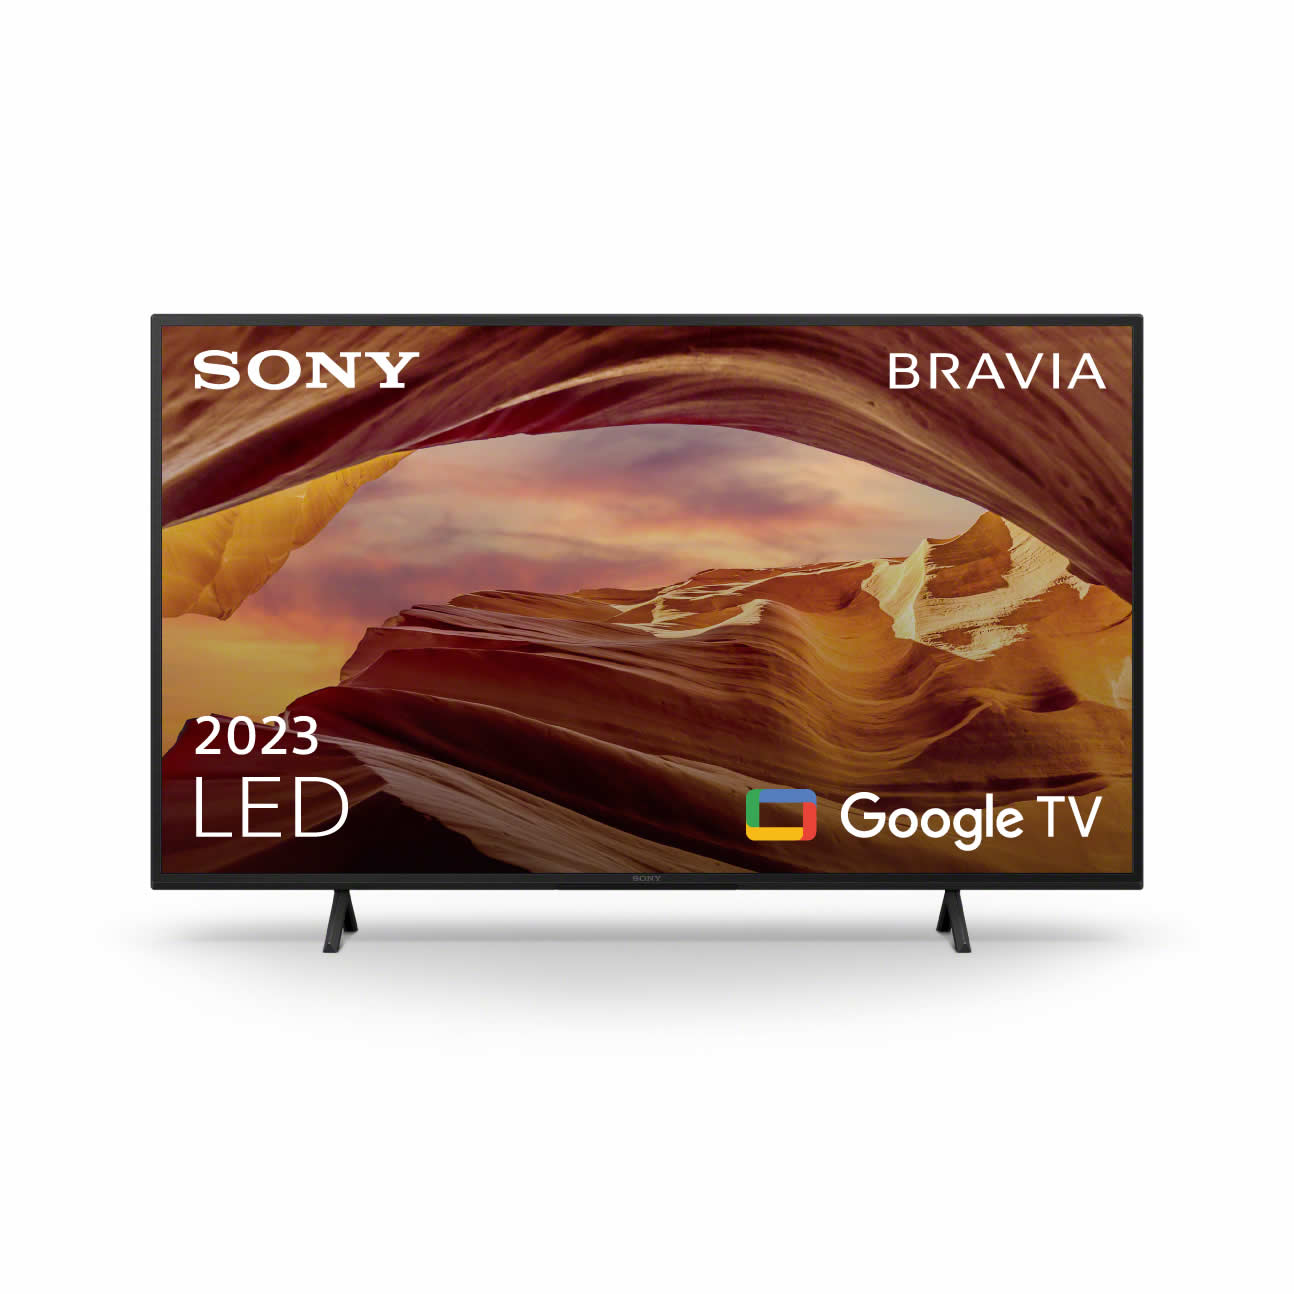 Sony 43inch 4K HDR LED SMART TV Google Wi-Fi